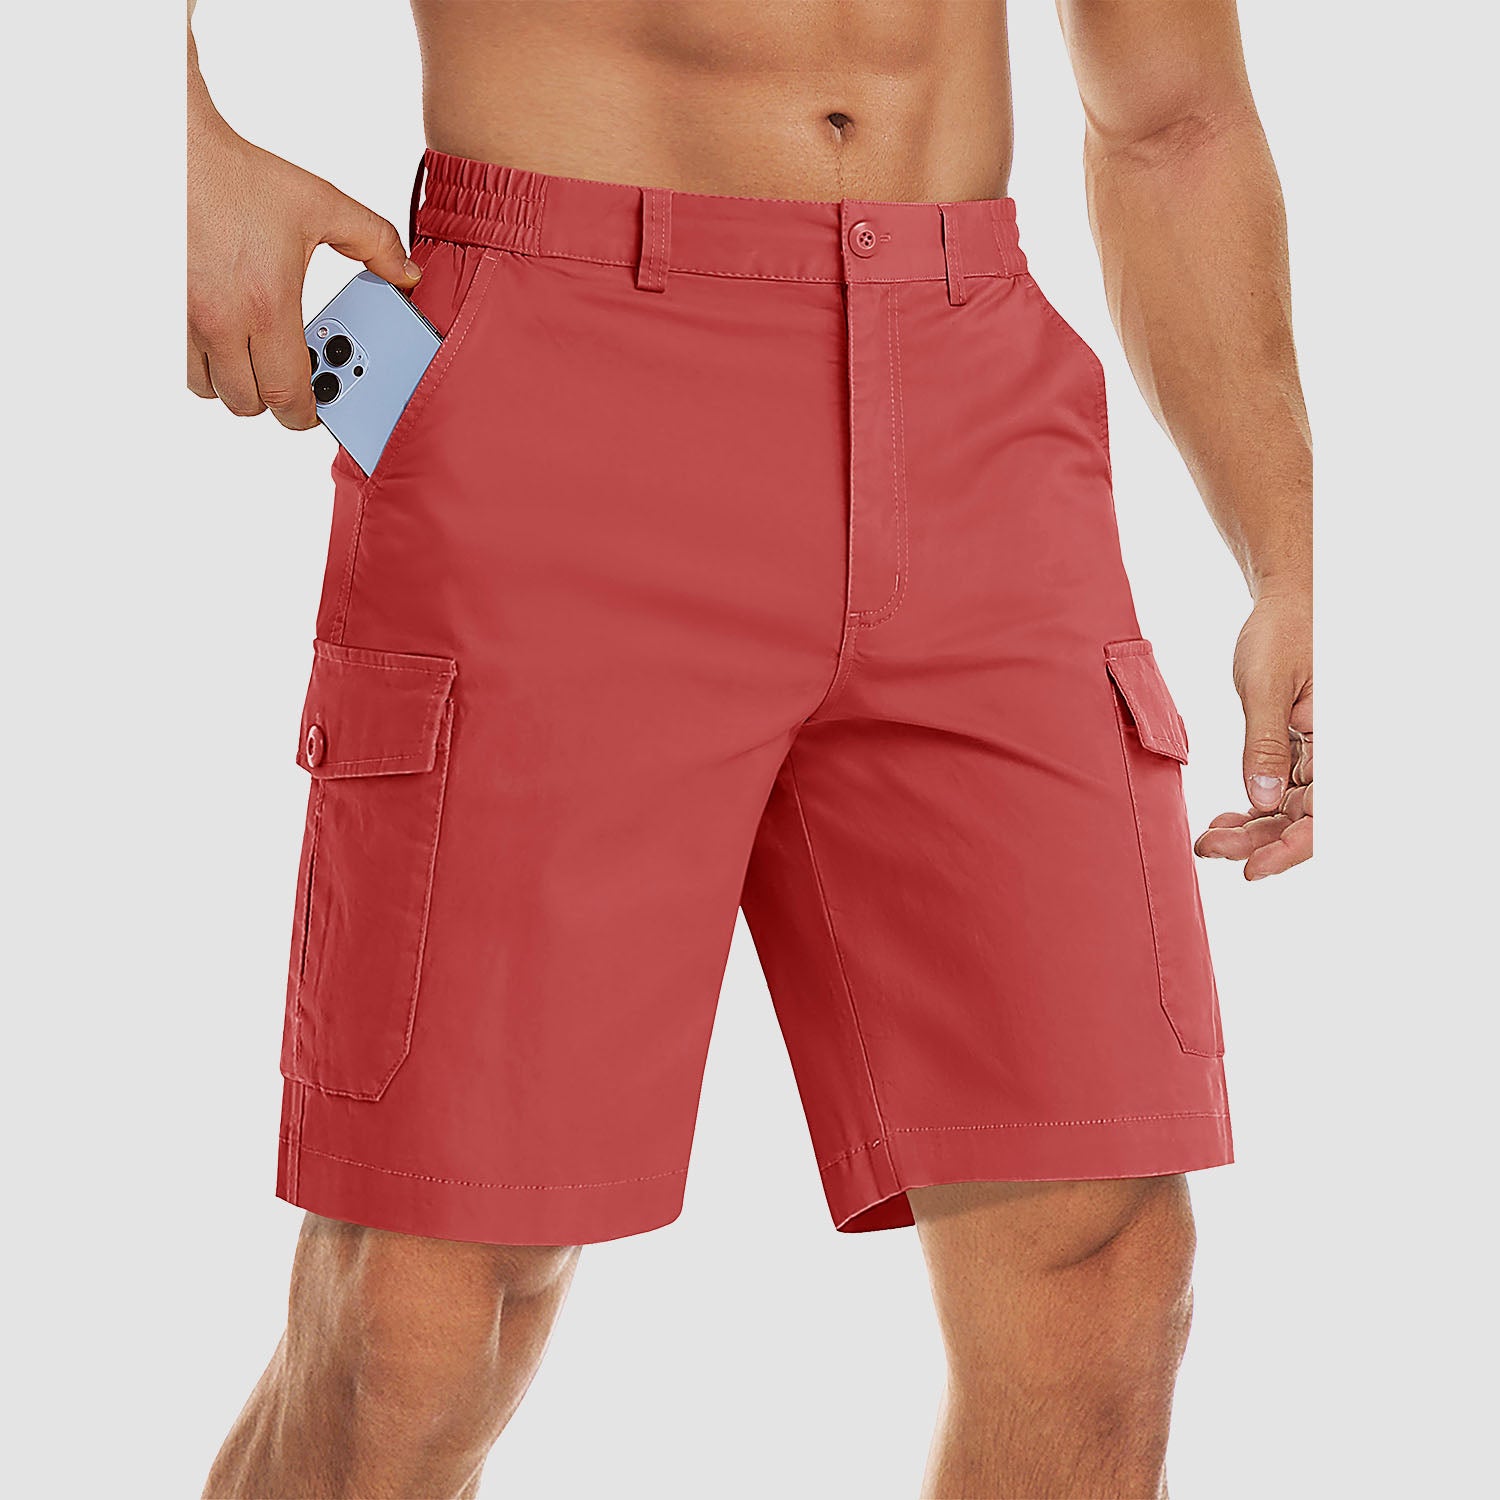 magcomsen MAGCOMSEN Sweat Shorts for Men with Pockets Soccer Shorts 3/4  Pants Summer Shorts Fishing Shorts Mens Casual Tactical Hiking Sho